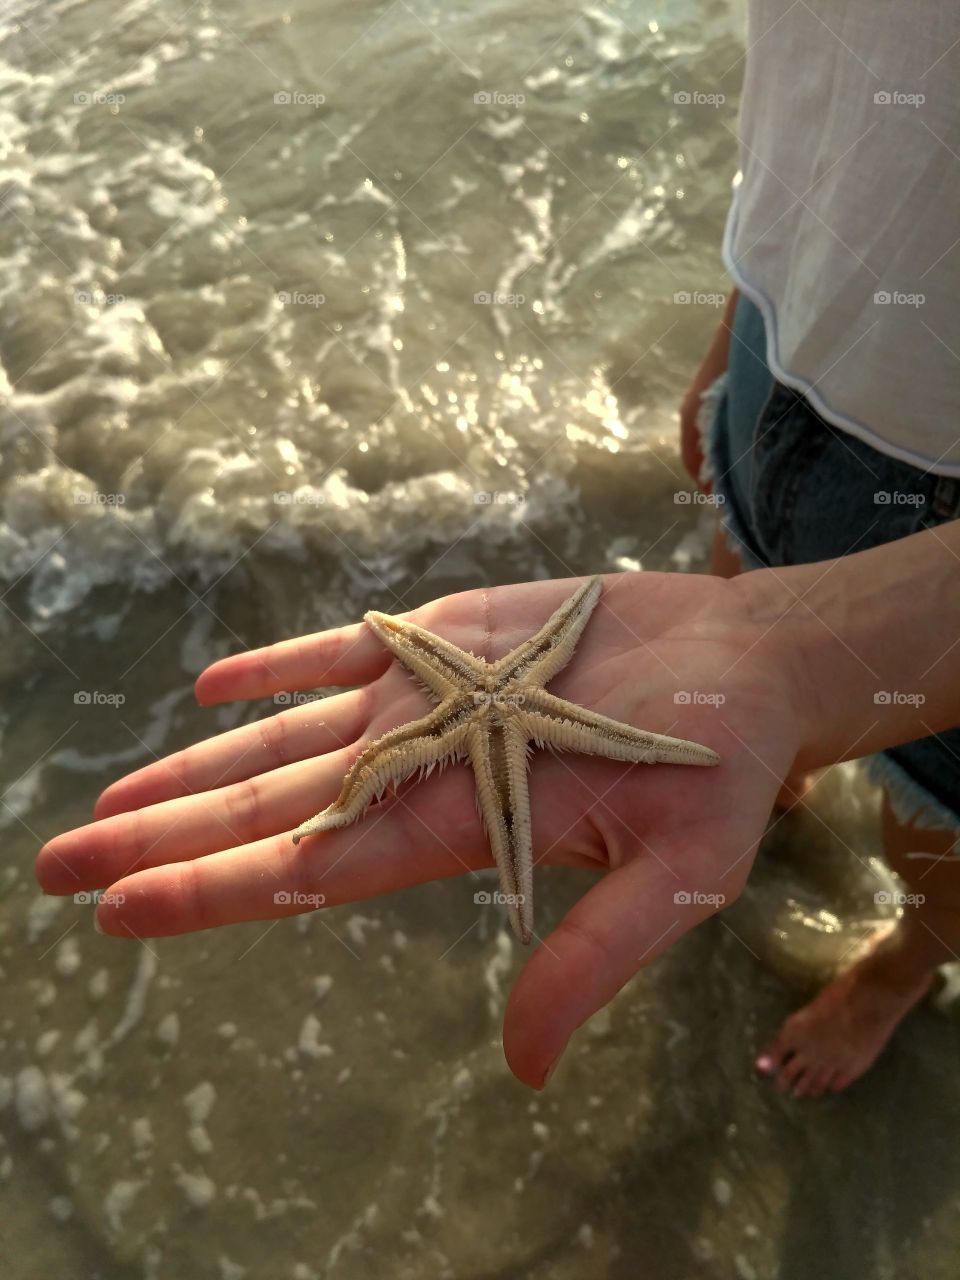 Starfish in the hand